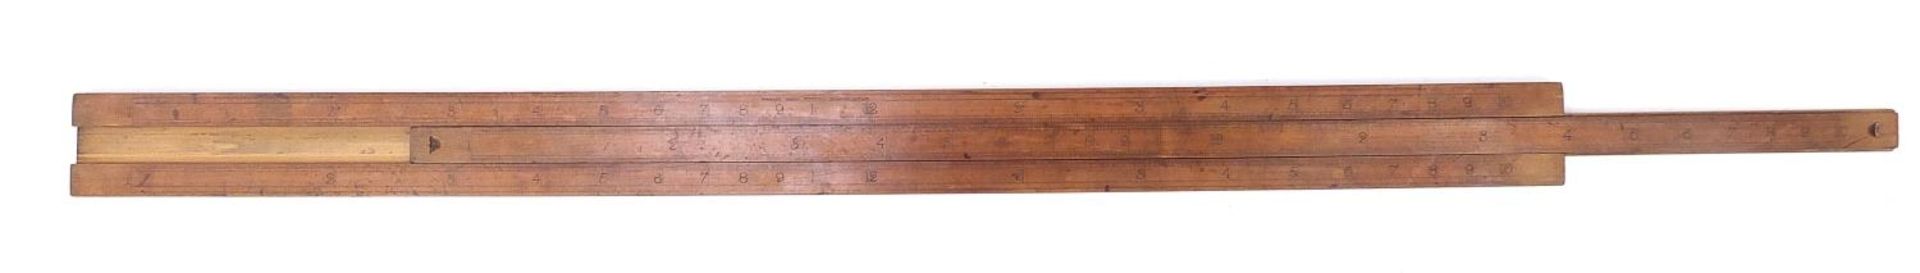 Antique Stanley boxwood three foot sliding rule impressed Stanley Great Turnstile Holborn London, - Bild 4 aus 14